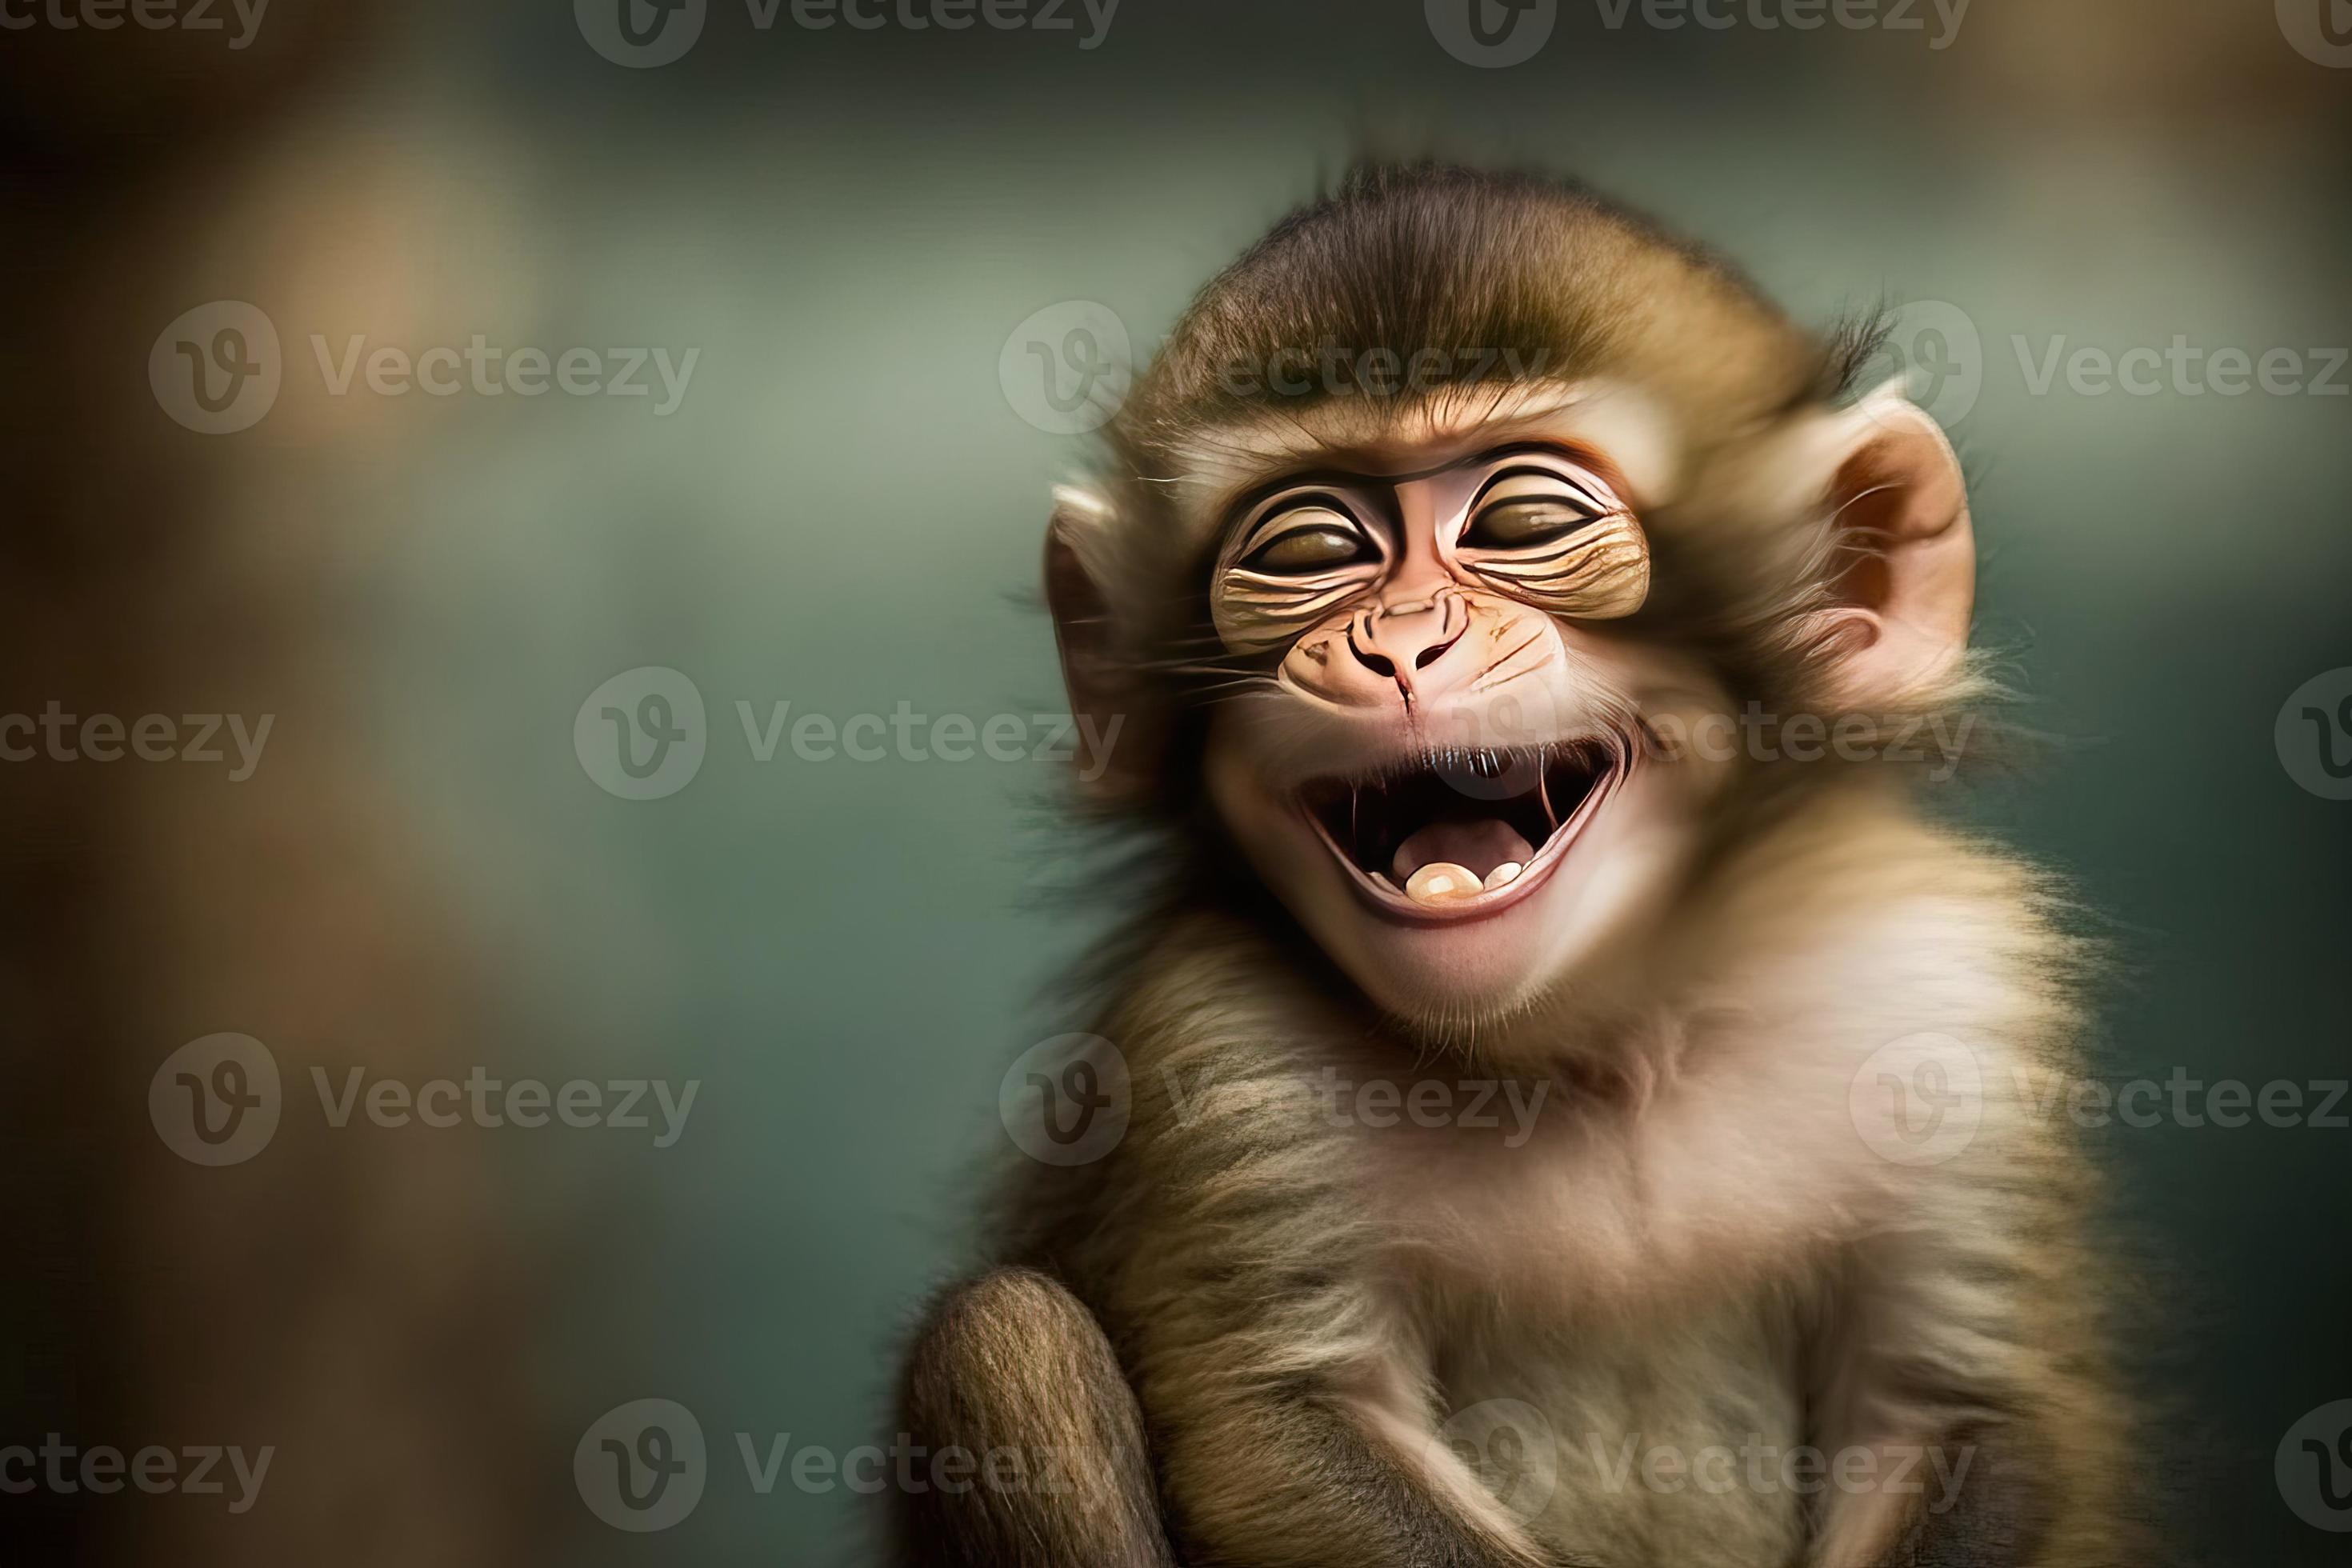 little monkey smile 22347007 Stock Photo at Vecteezy